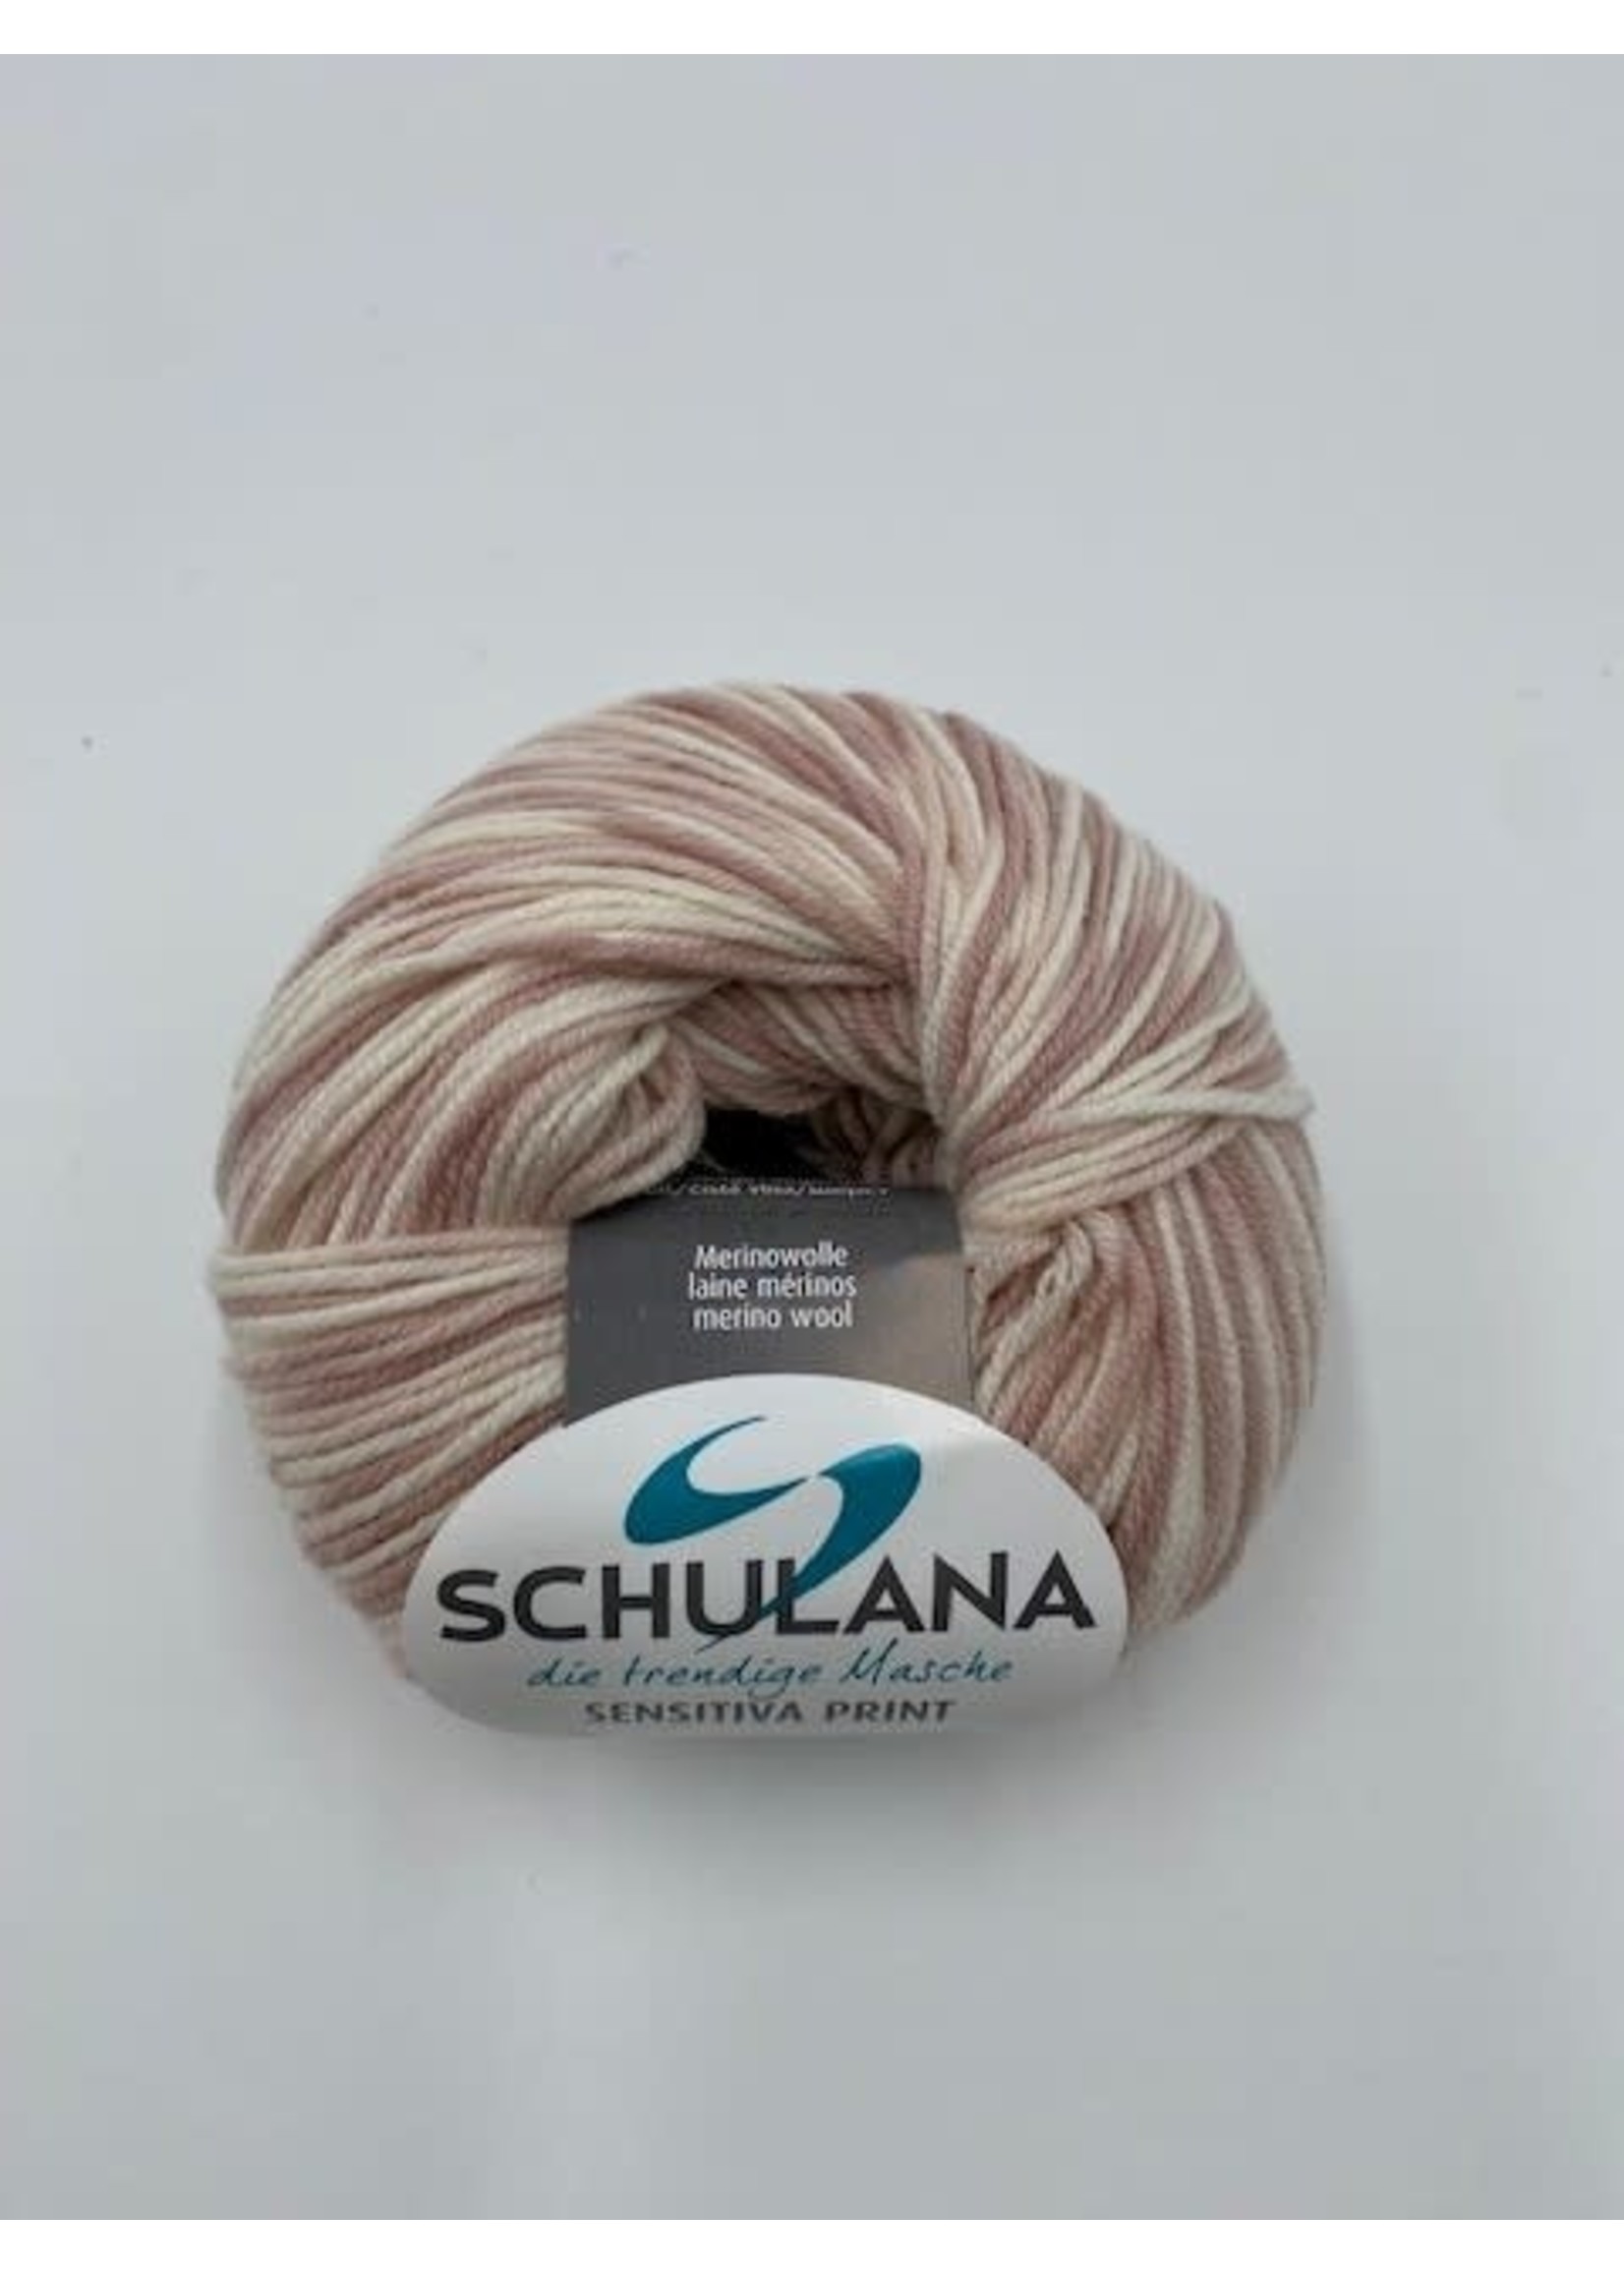 Schulana Sensitiva  Print Schulana 50 gr kleur 209 Roze mix